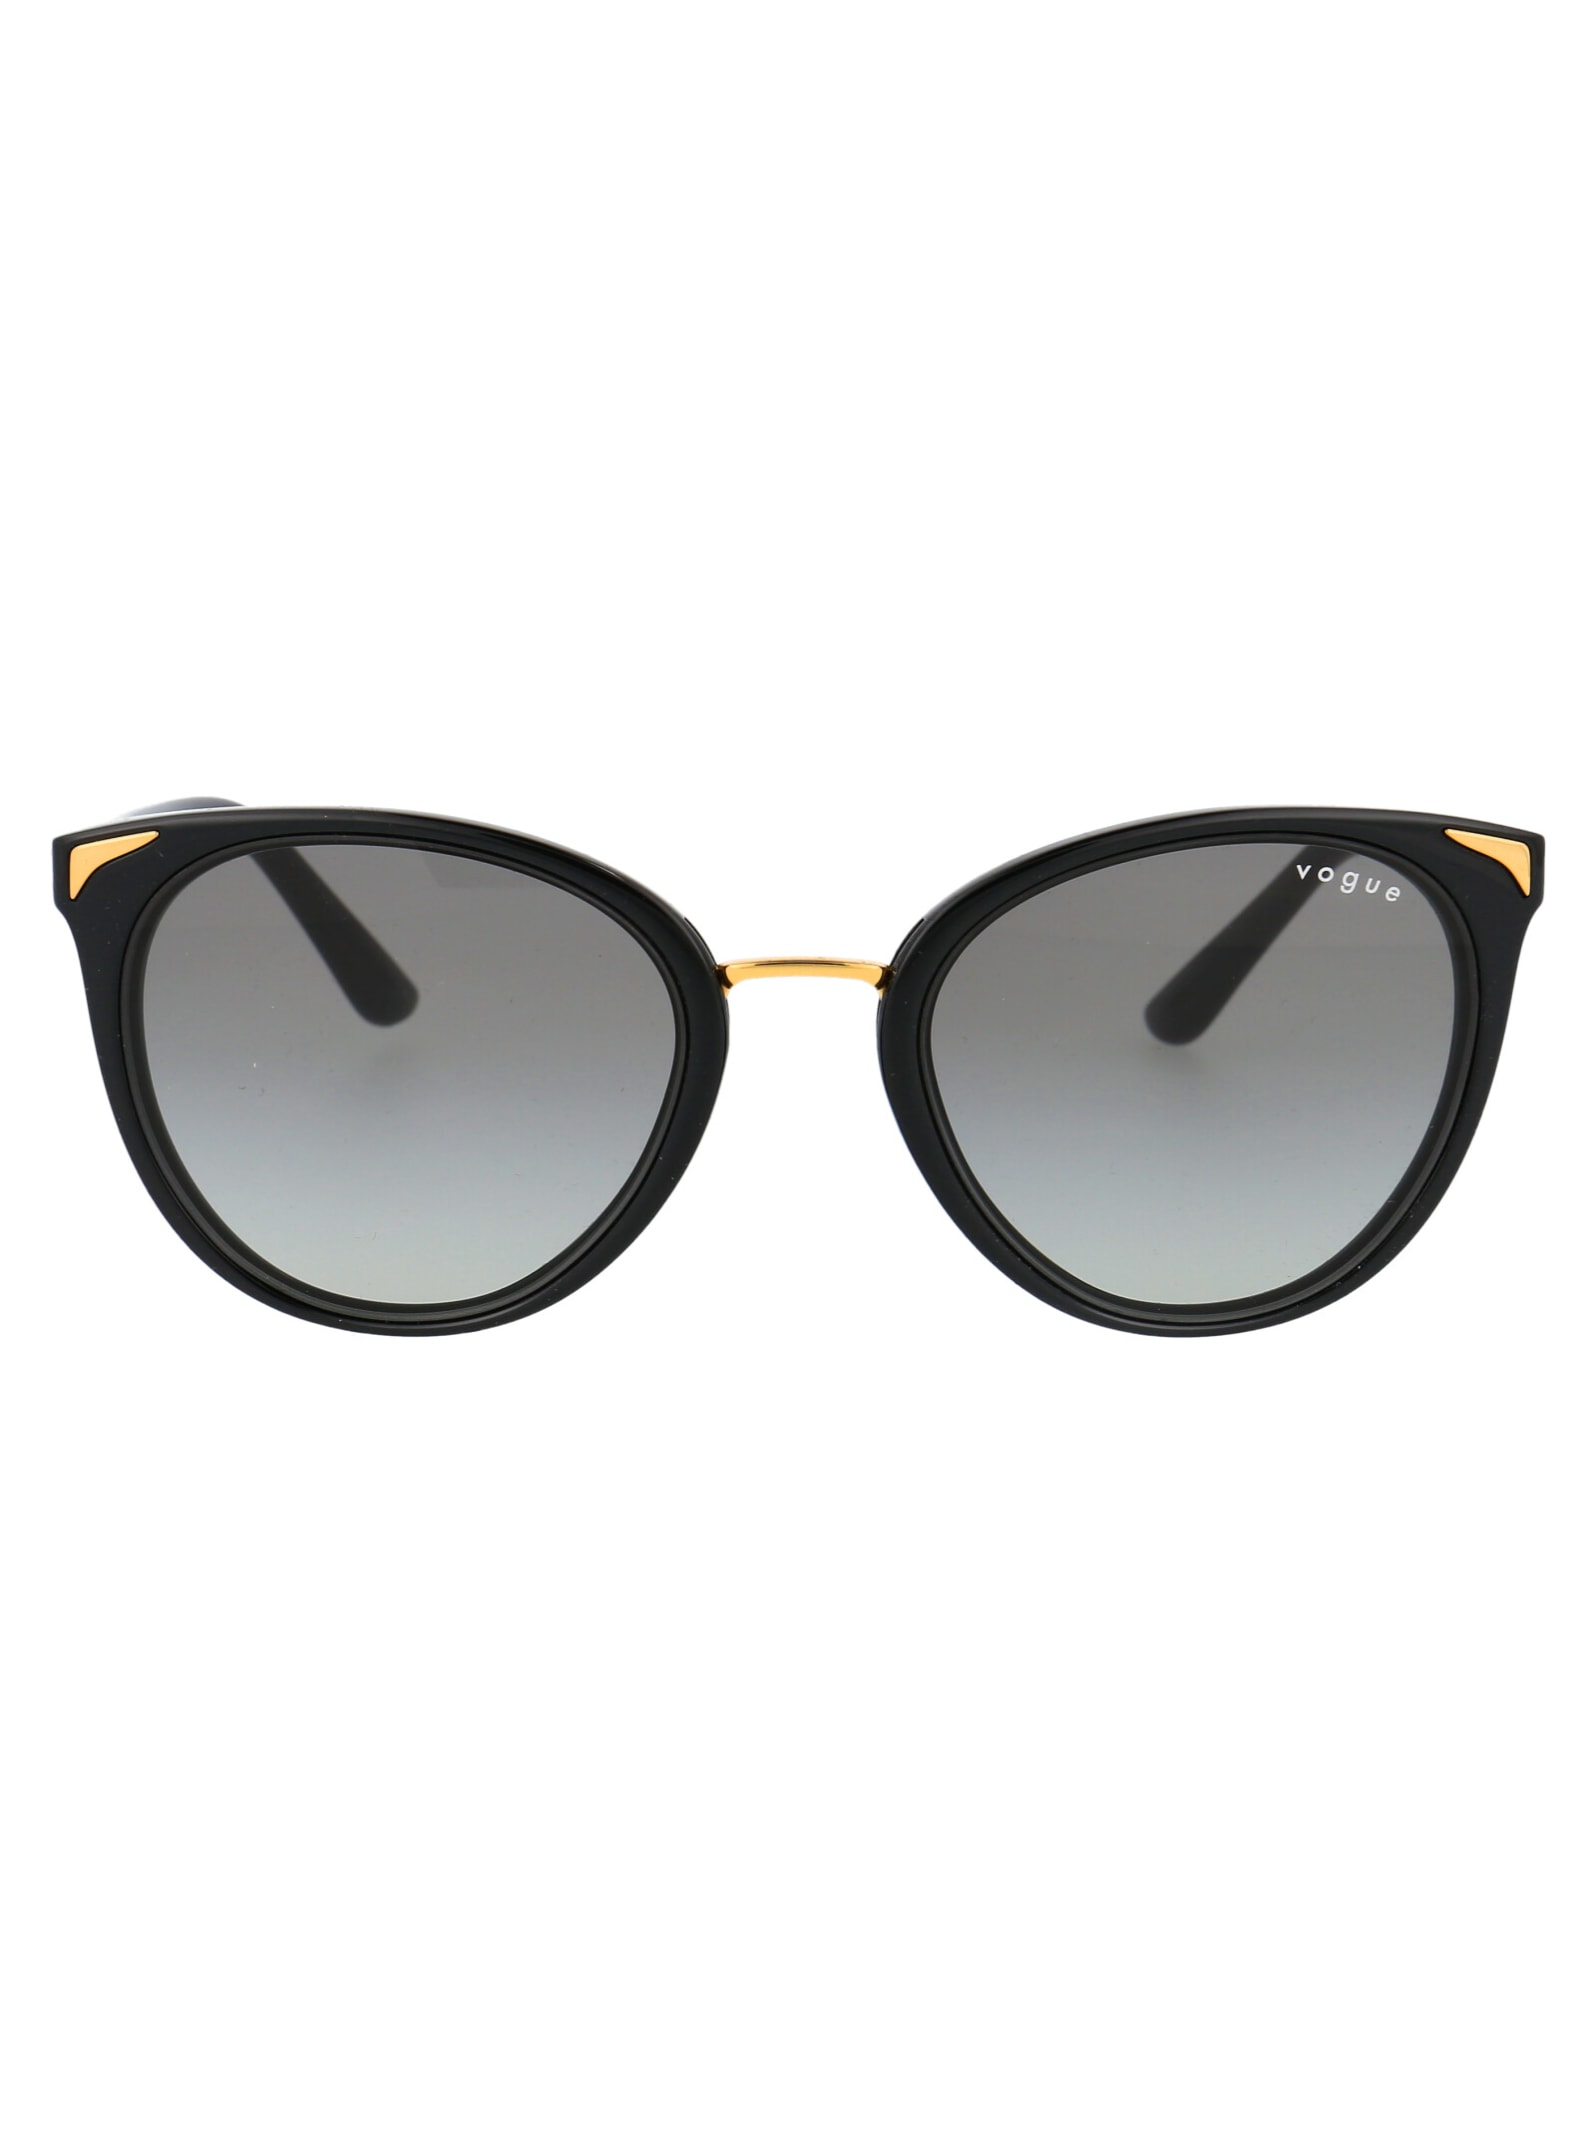 Vogue Eyewear 0vo5230s Sunglasses